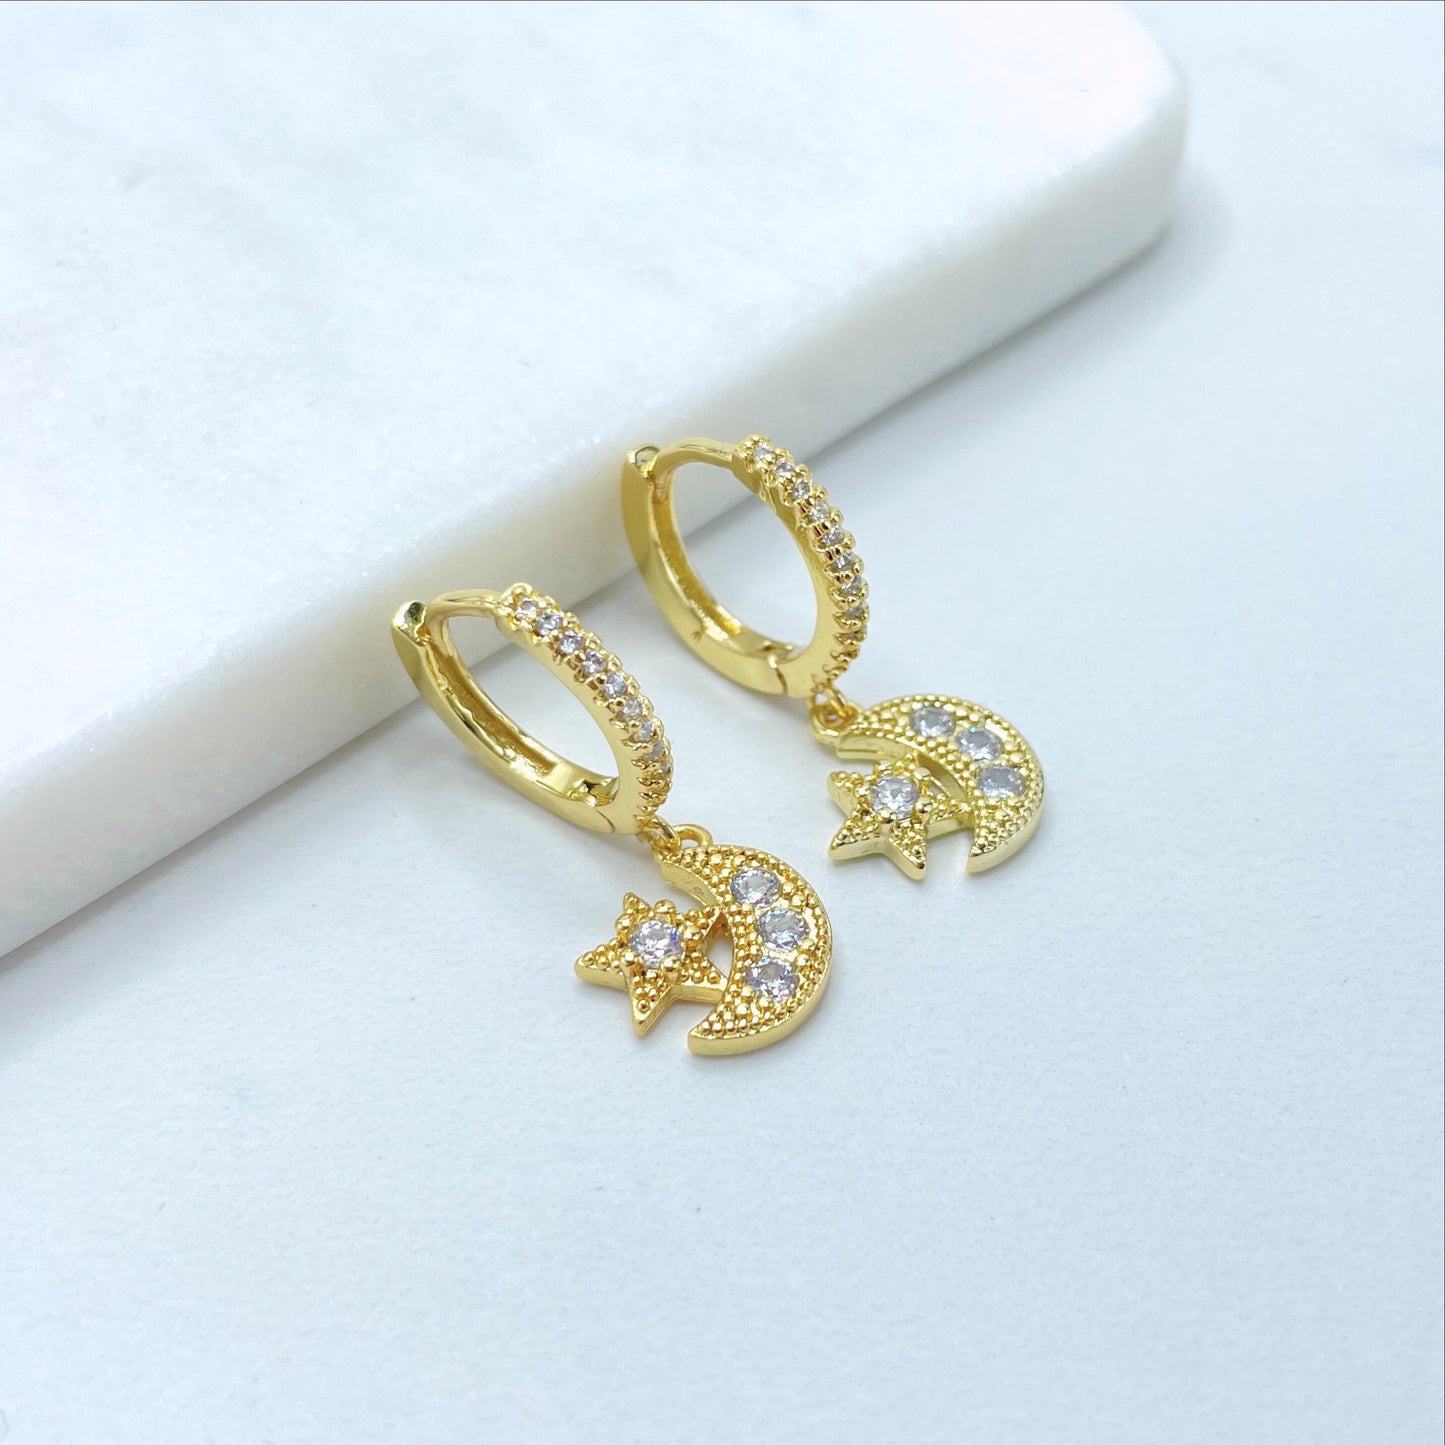 18k Gold Filled 15mm Huggie Earrings with Micro Cubic Zirconia Moon & Star Shape Charm, Dangle Earrings, Wholesale Jewelry Making Supplies